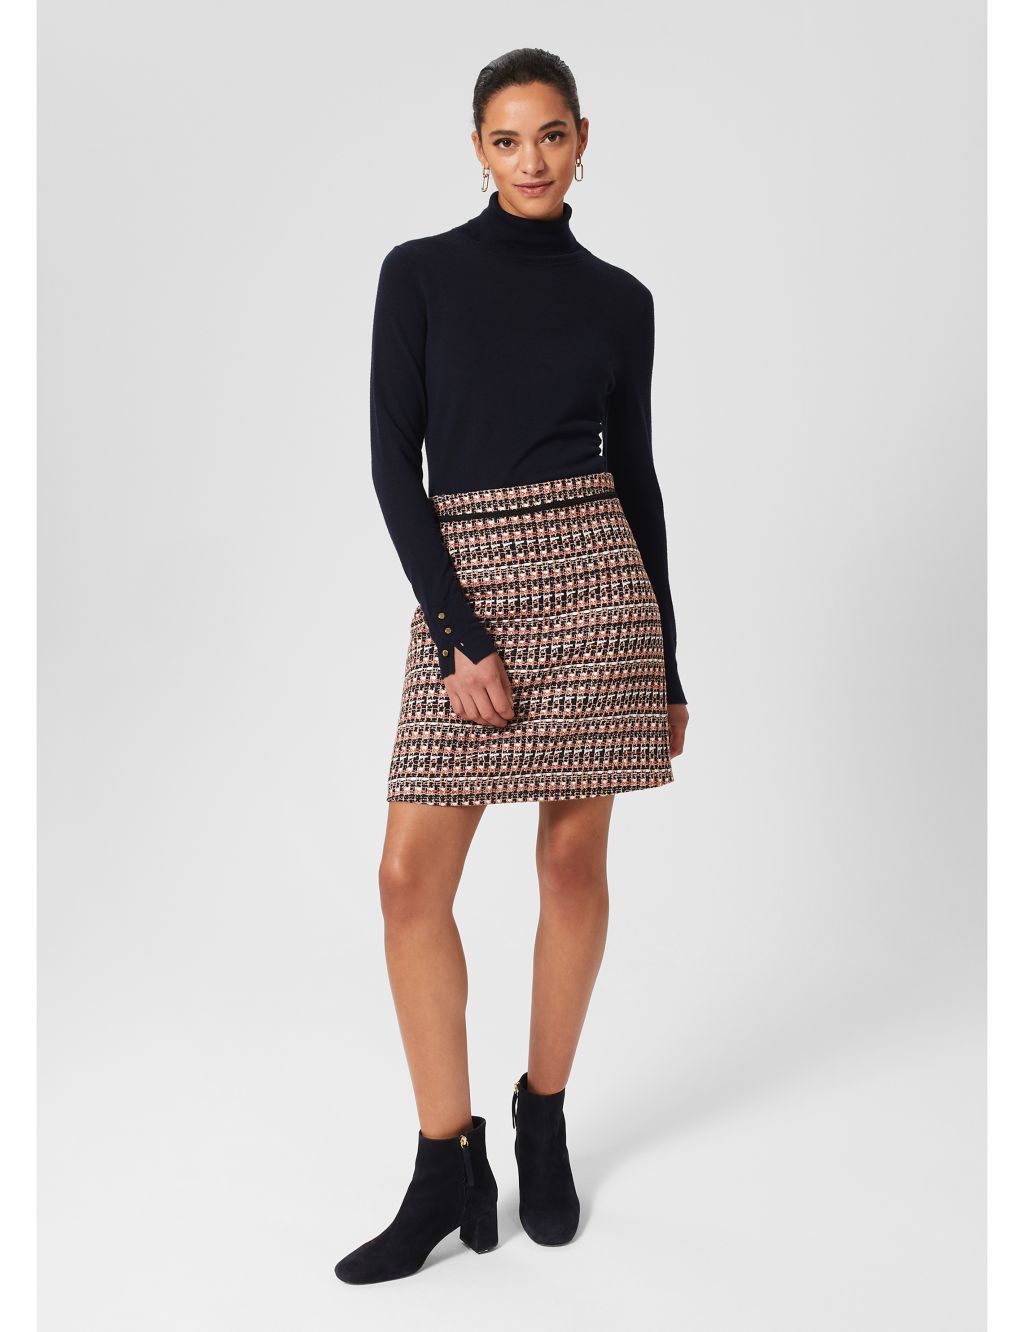 Textured Mini Slip Skirt image 1